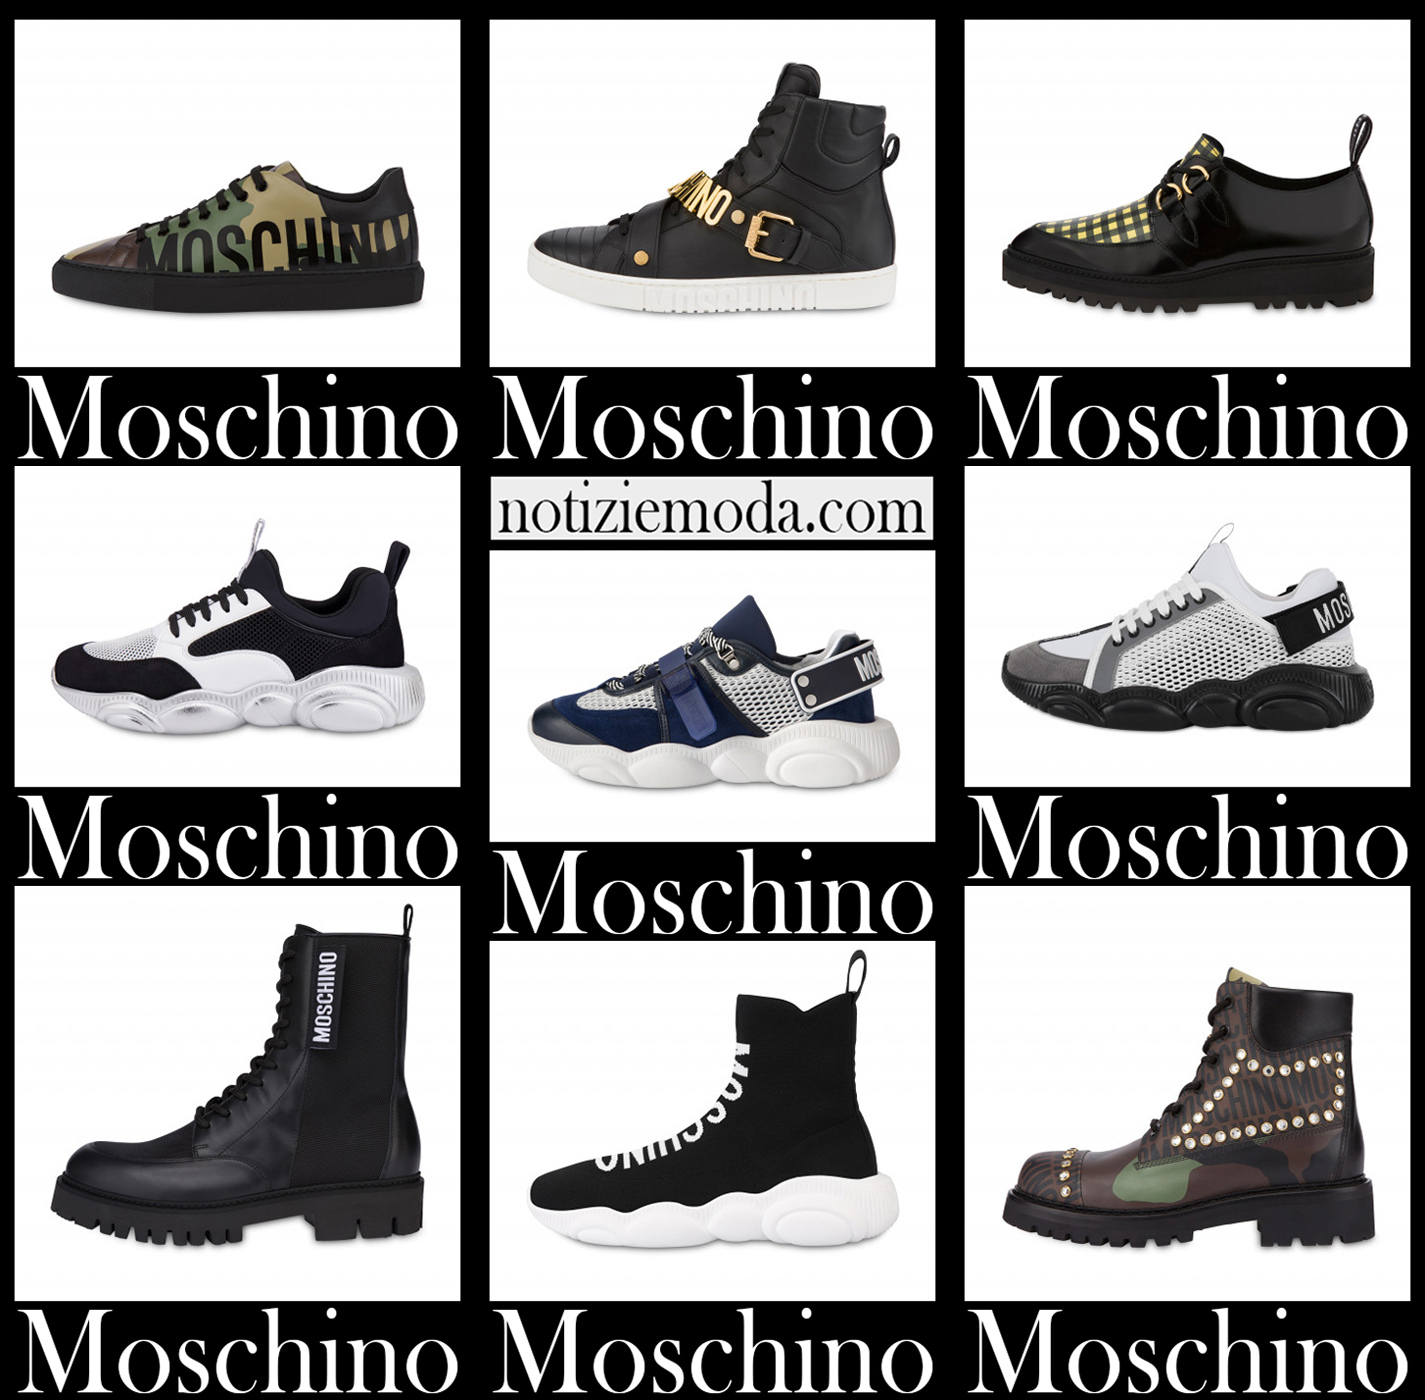 Nuovi arrivi scarpe Moschino 2021 calzature moda uomo